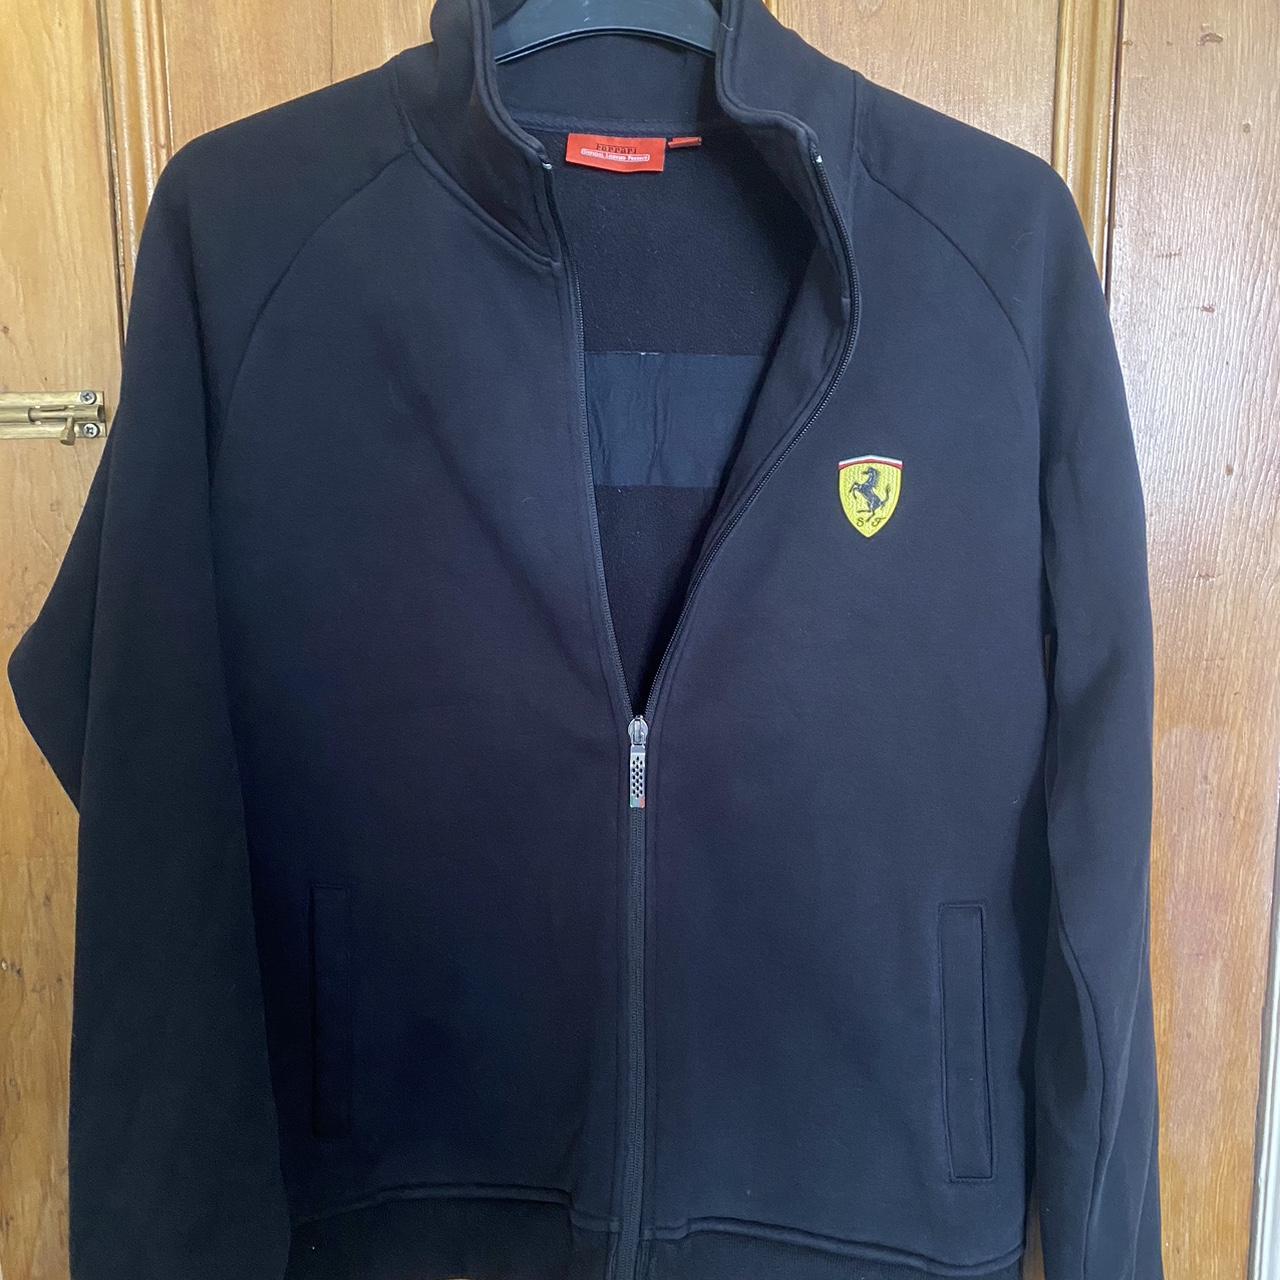 Black Official Ferrari jacket (not sure when it's... - Depop